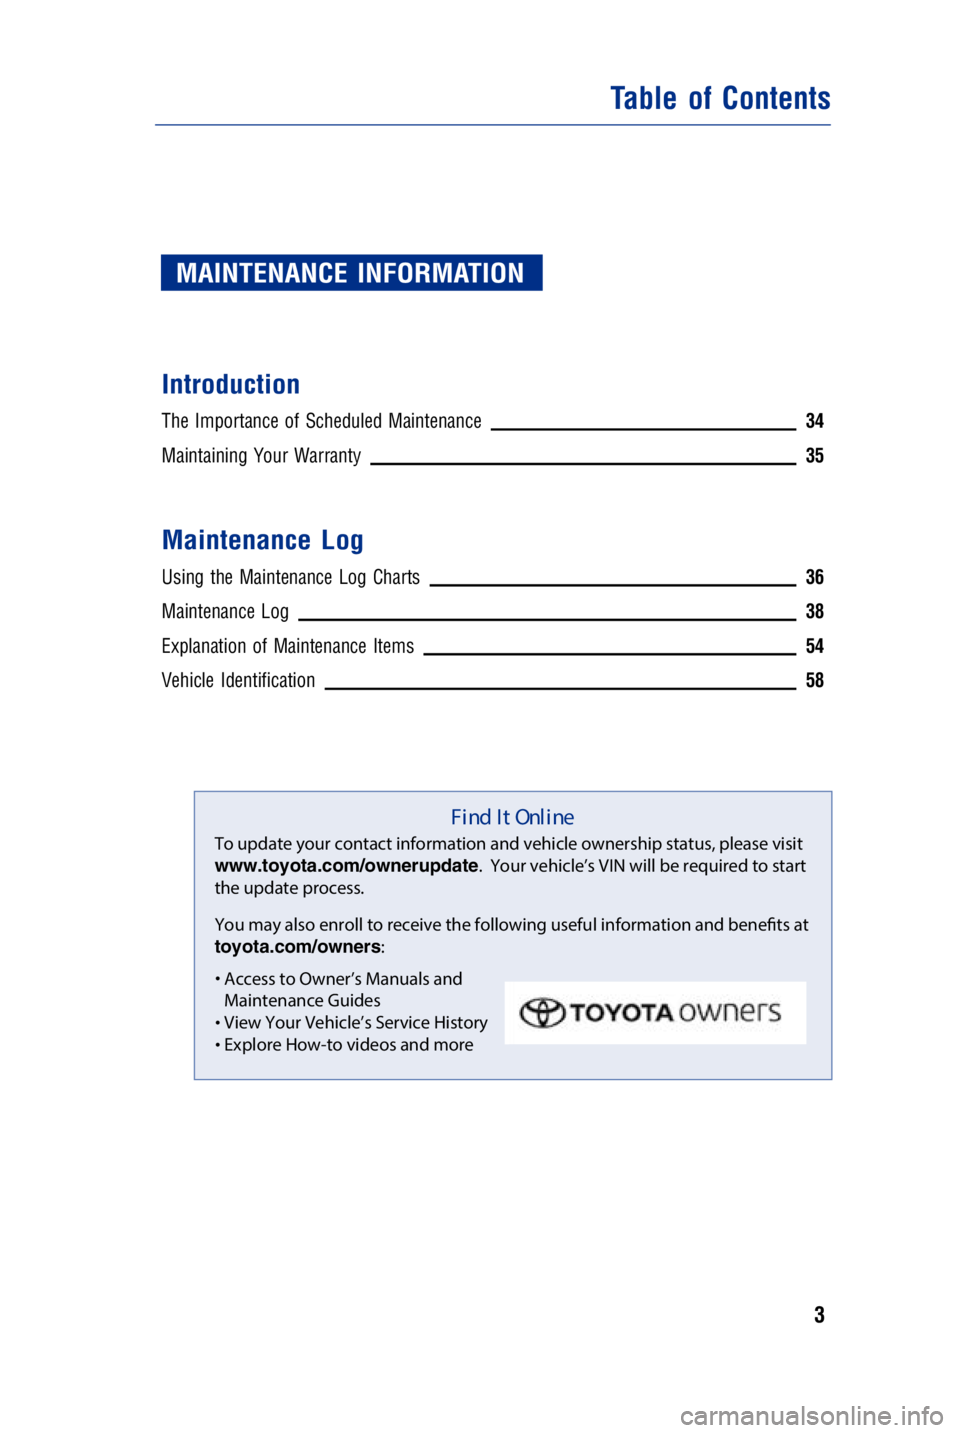 TOYOTA AVALON HYBRID 2018  Warranties & Maintenance Guides (in English) JOBNAME: 2878003-en-2018_Aval PAGE: 3 SESS: 4 OUTPUT: Fri May 5 09:42:48 2017
/InfoShareAuthorCODA/InfoShareAuthorCODA/TS_Warr_Maint/2878003-en-2018_A\
valon_Hybrid.00505-18WMG-AVAHV/TS_Warr_Maint_v1
